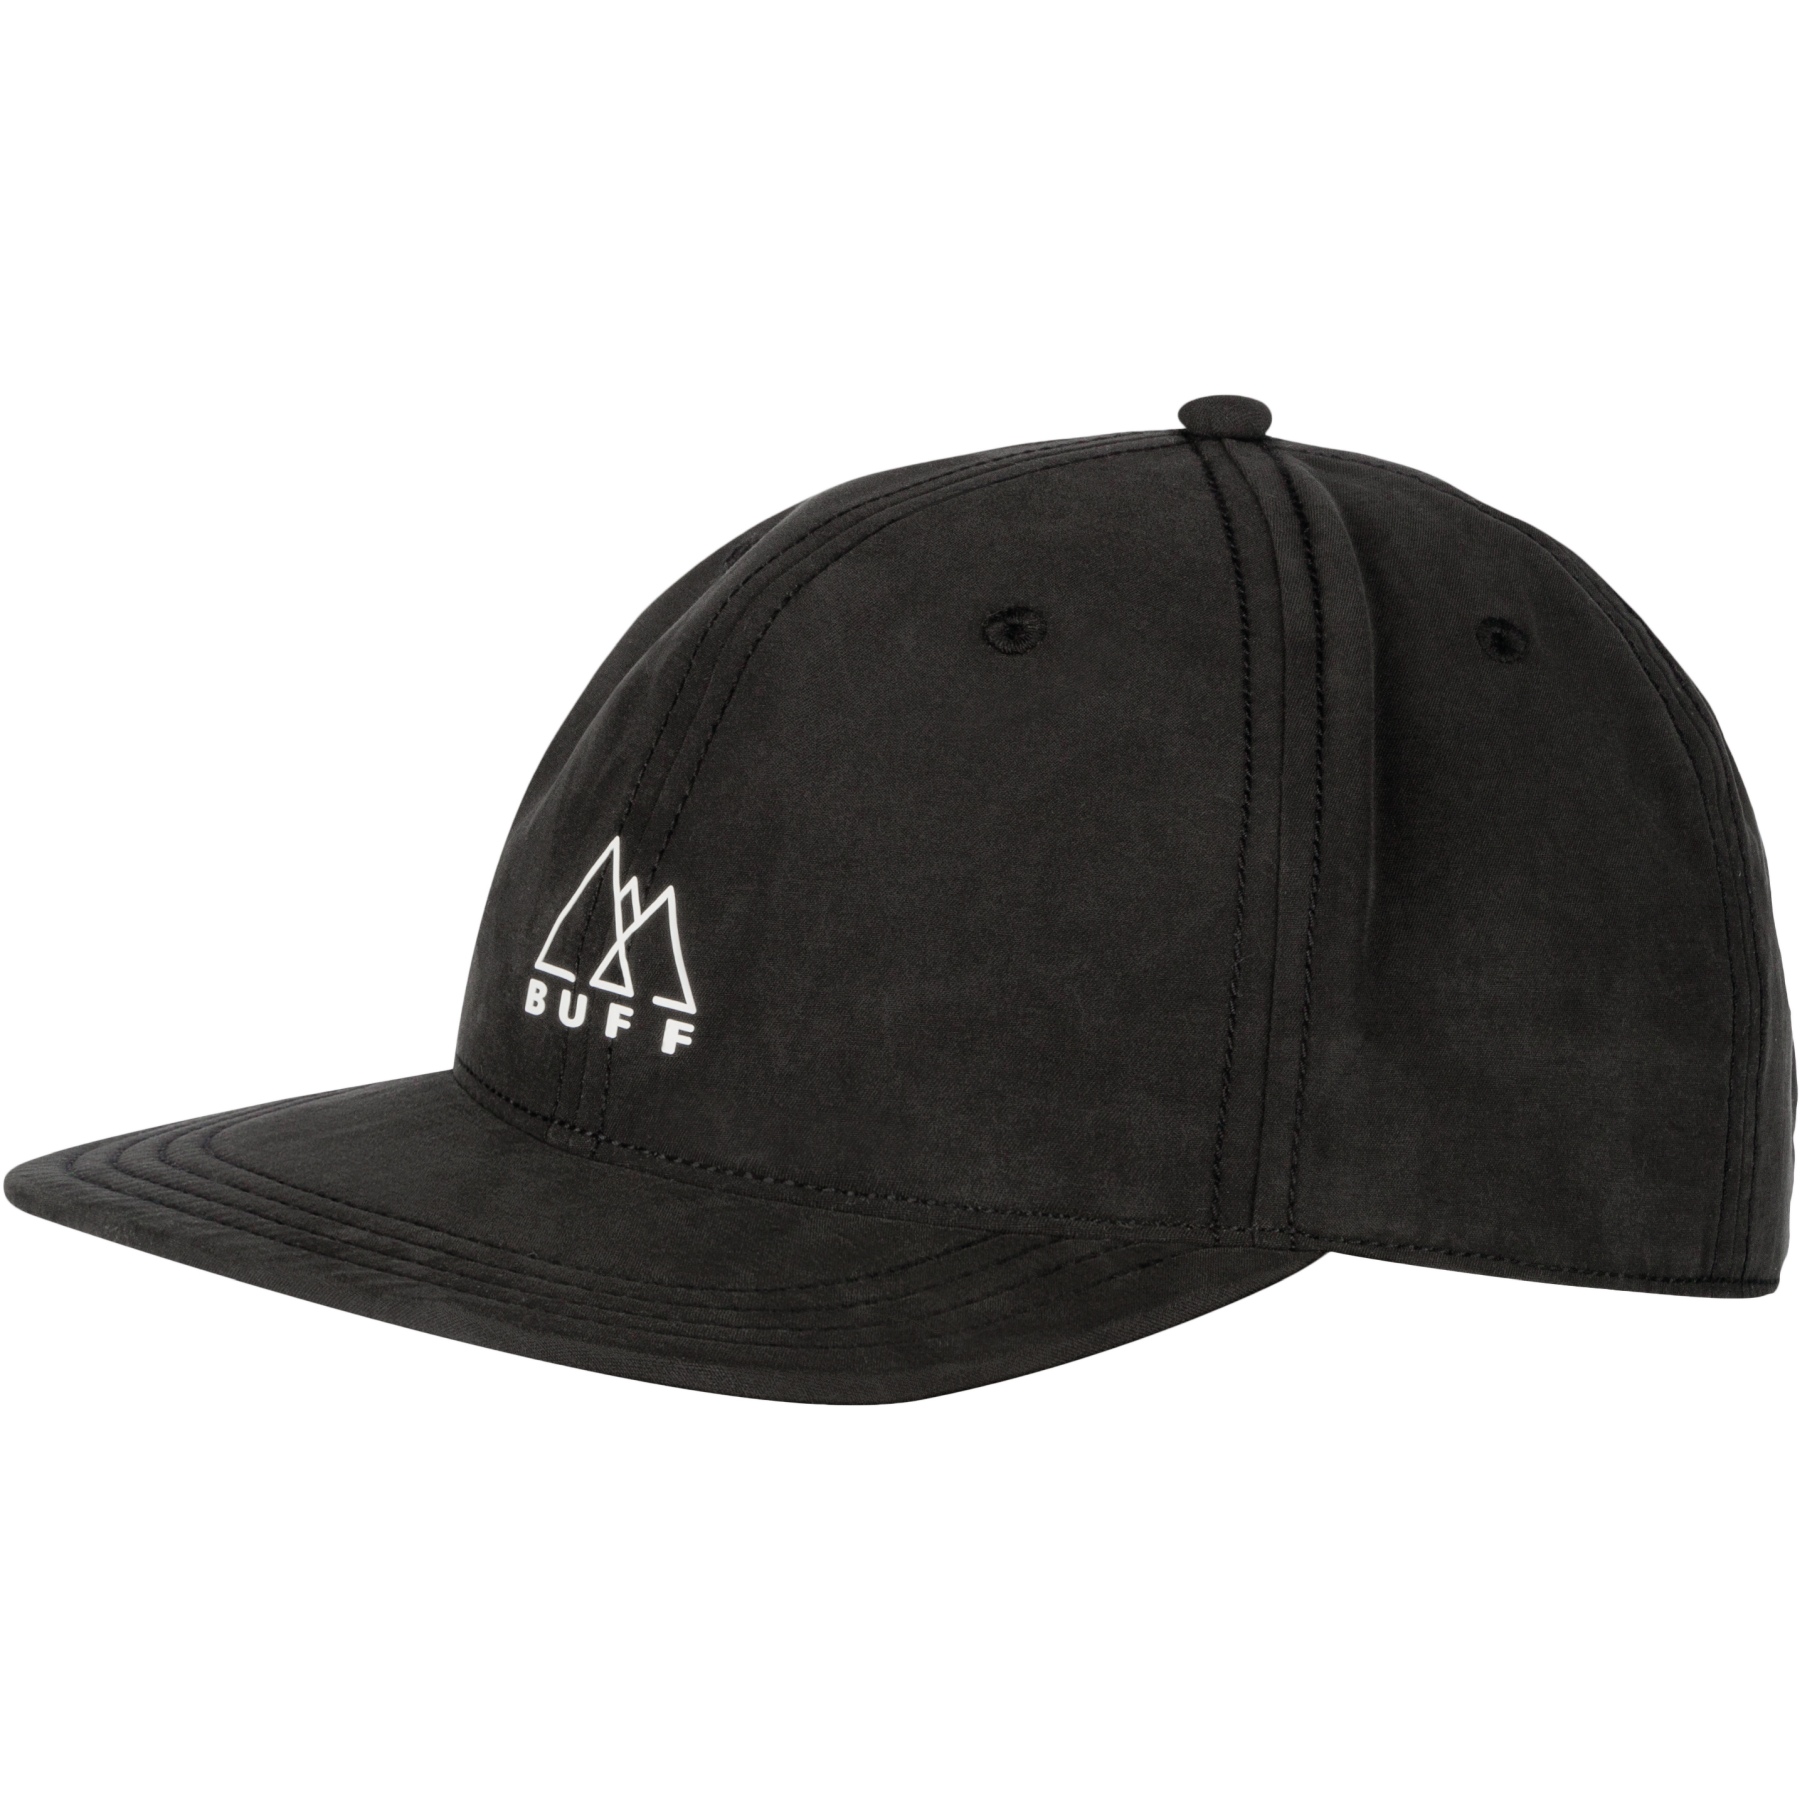 Image of Buff® Pack Baseball Cap - Solid Black